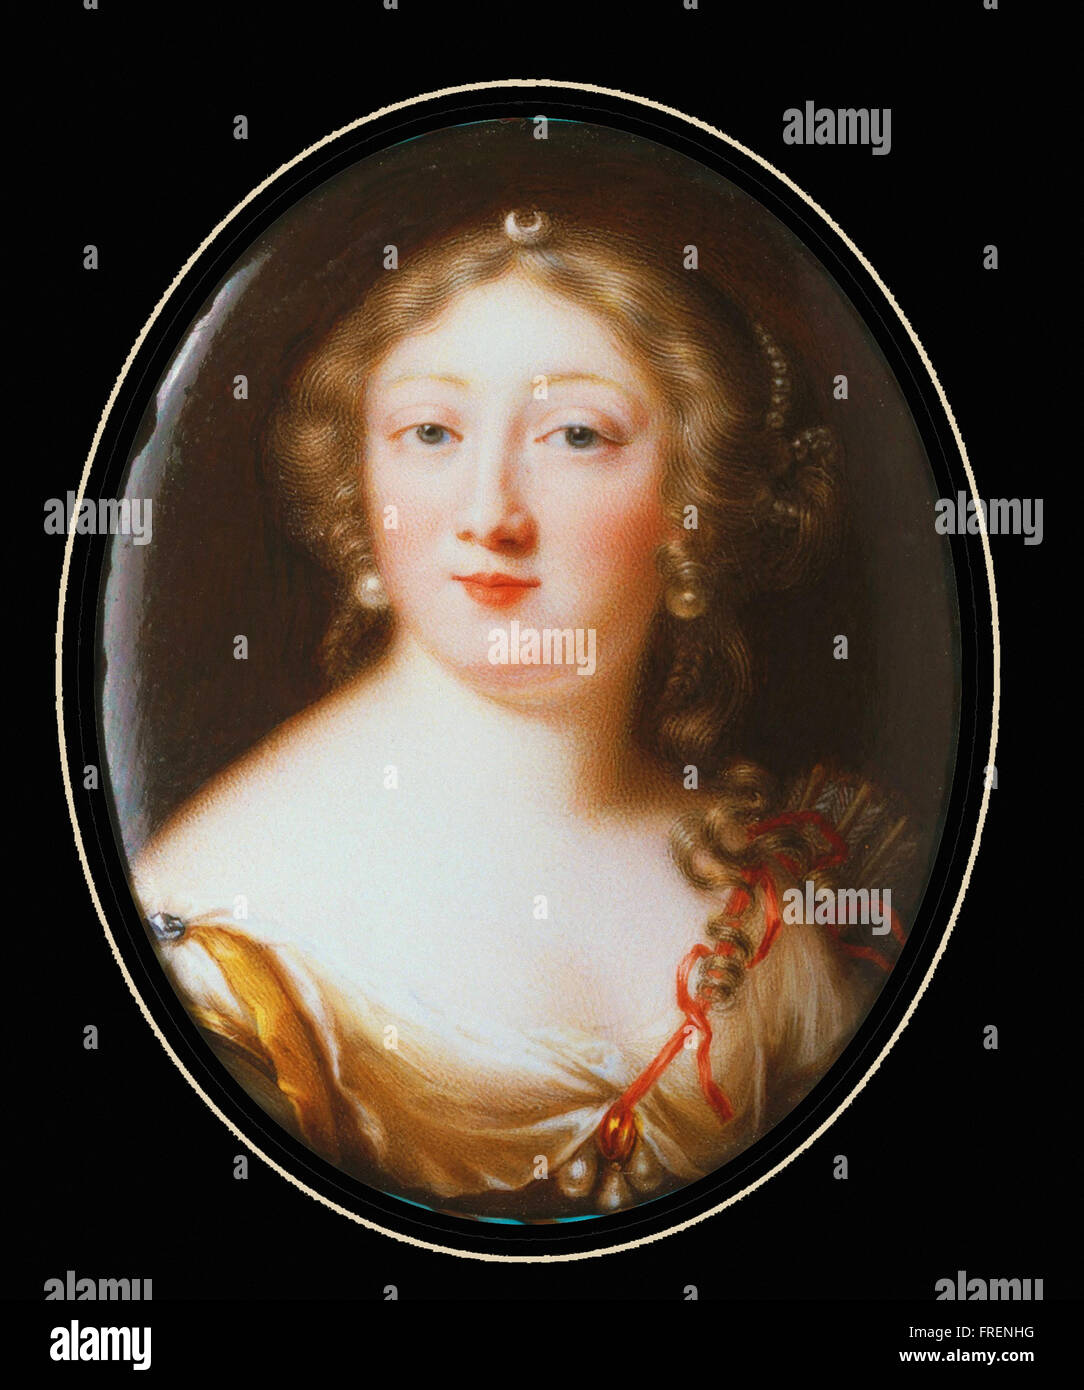 Jean Petitot, French - Portrait of Catherine-Henriette d'Angennes, Countess d'Olonne, as Diana Stock Photo